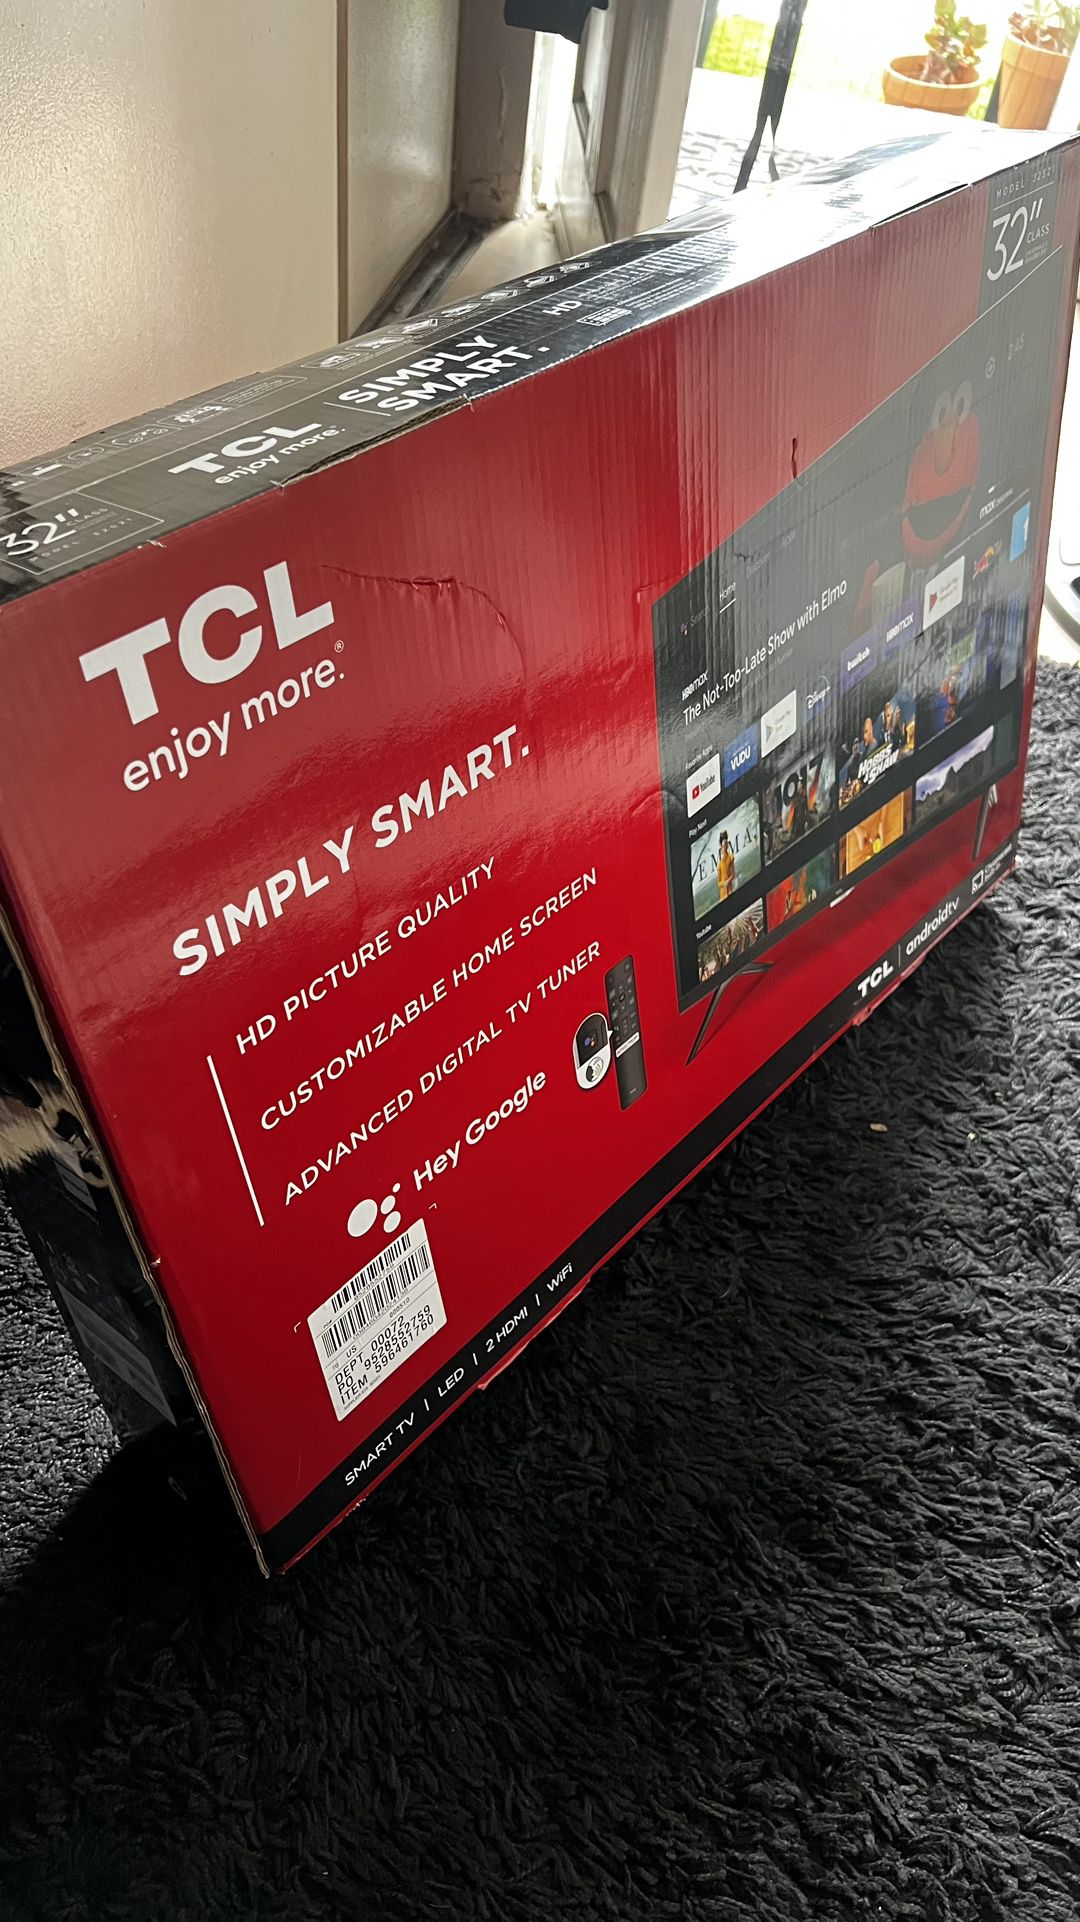 Smart TV 32” New (Nueva)